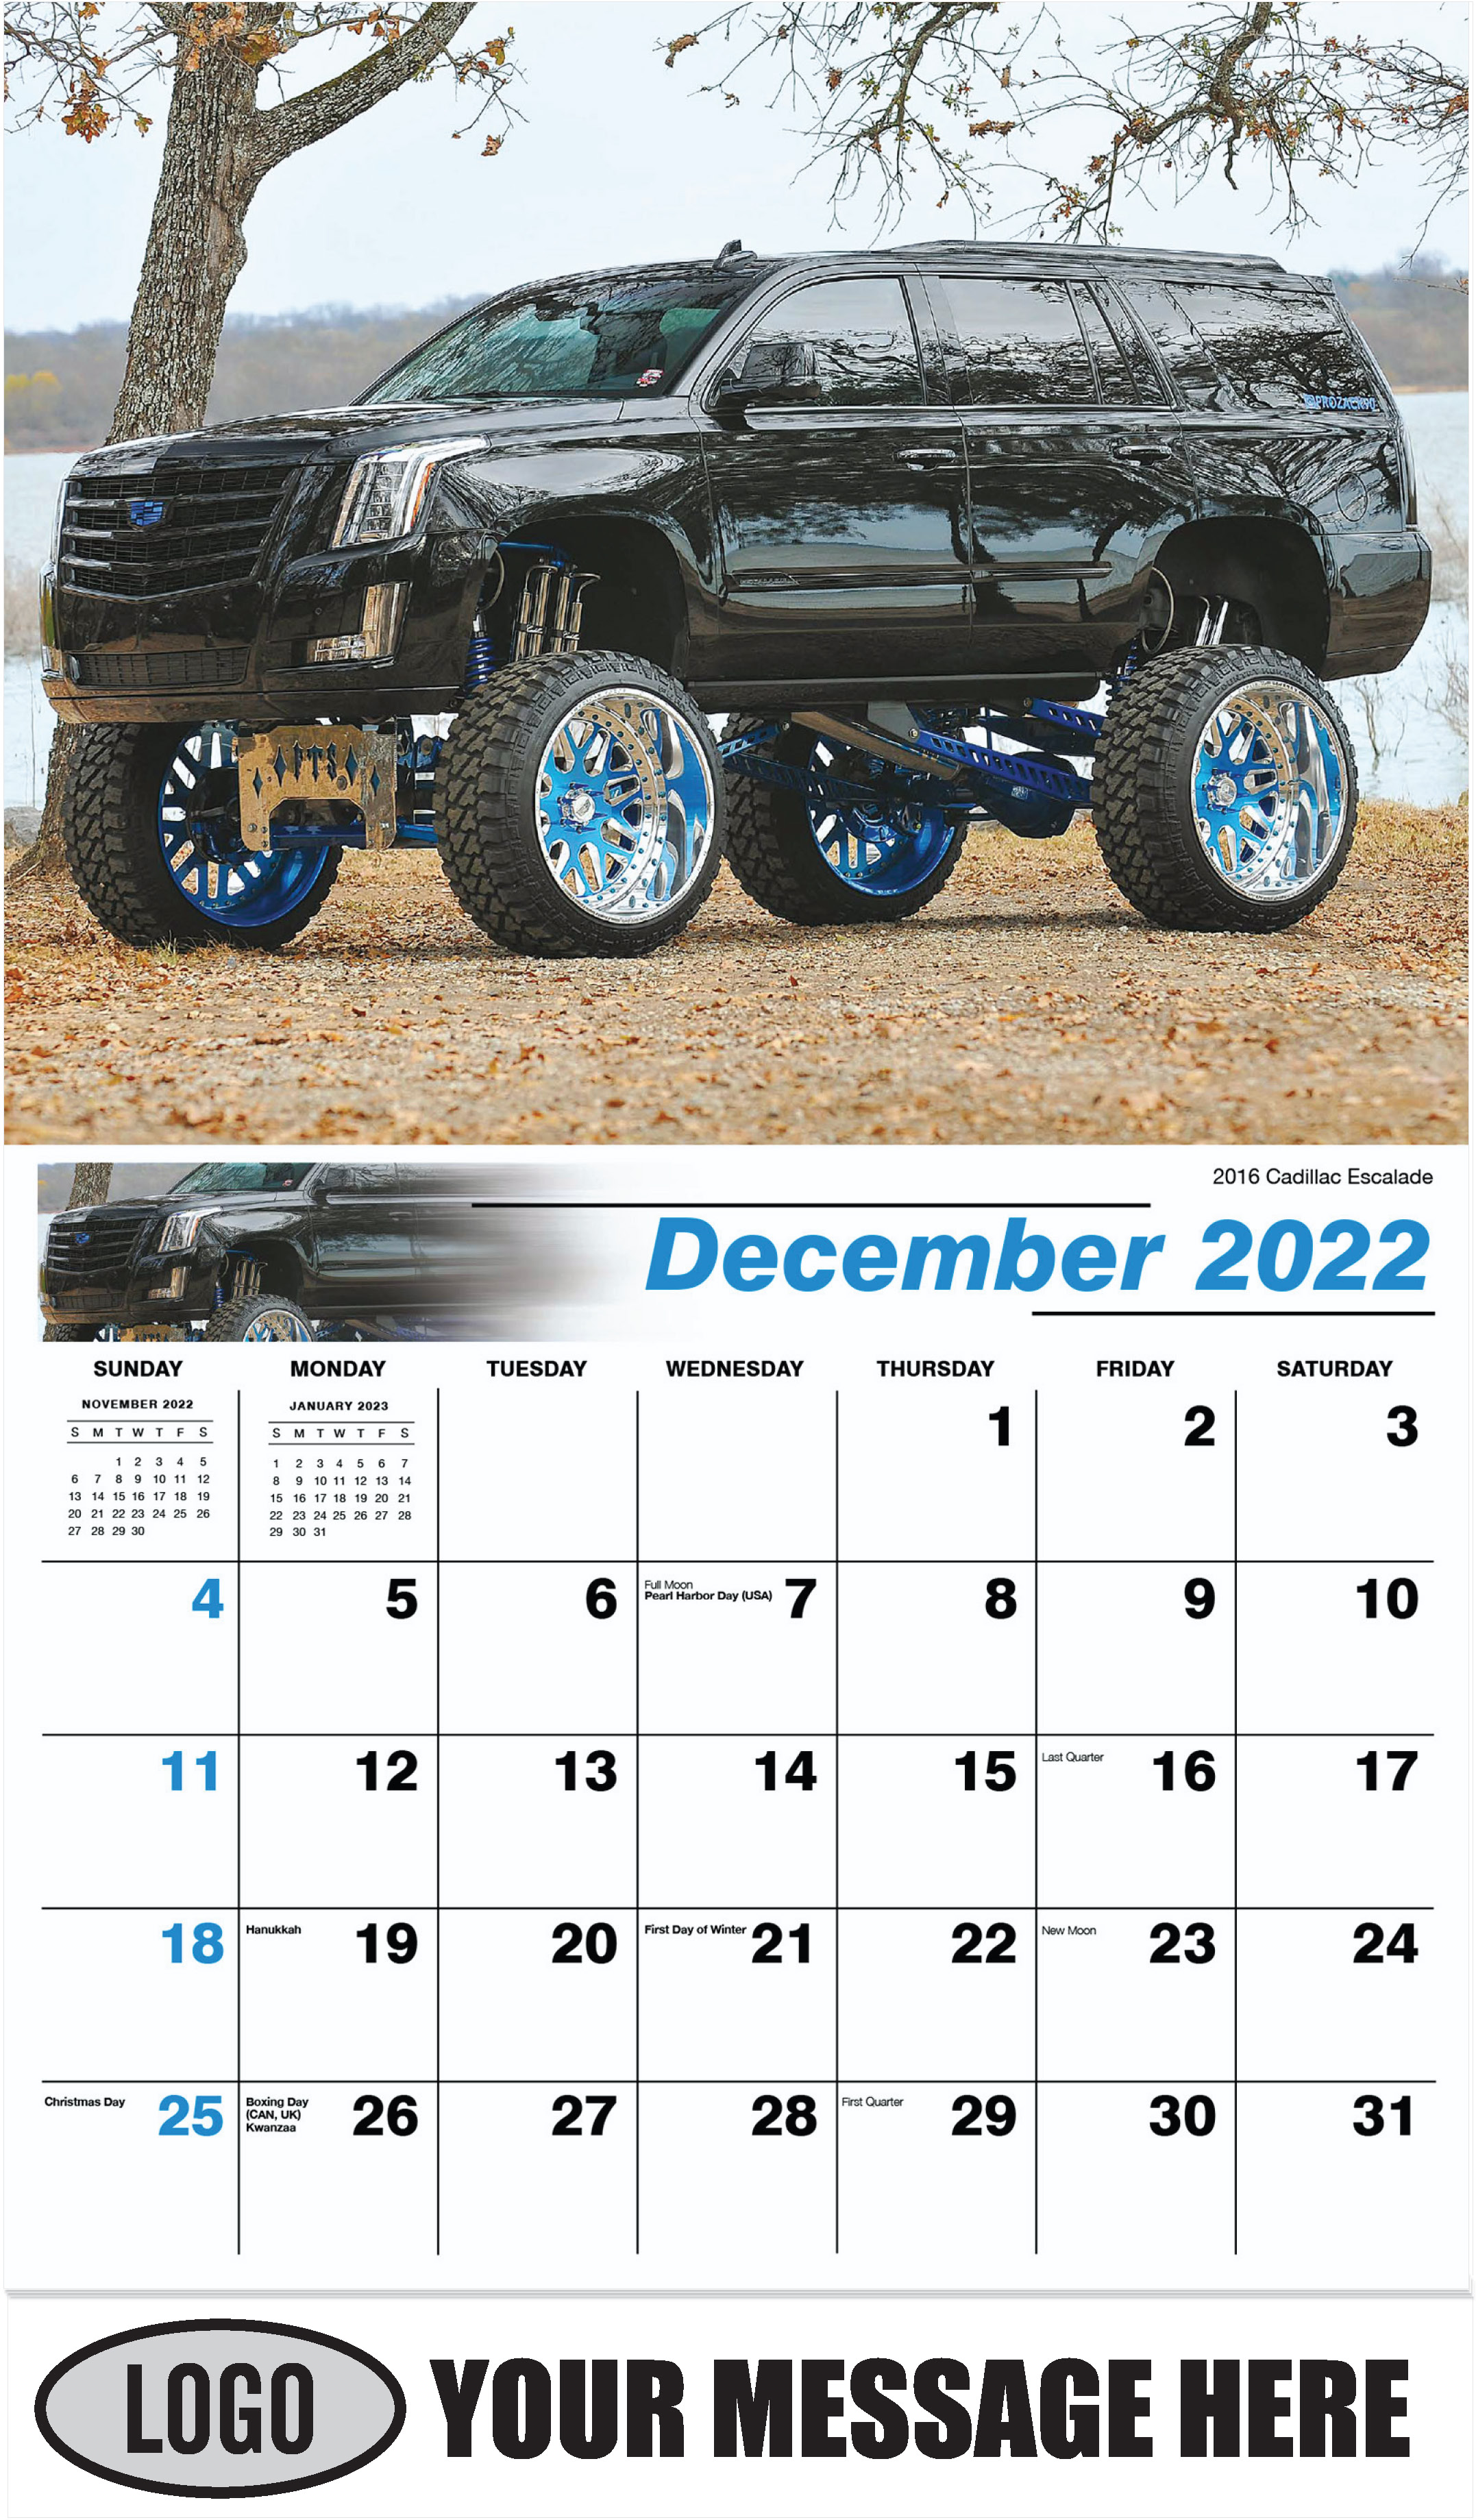 2016 Cadillac Escalade - December 2022 - Pumped Up Pickups 2023 Promotional Calendar